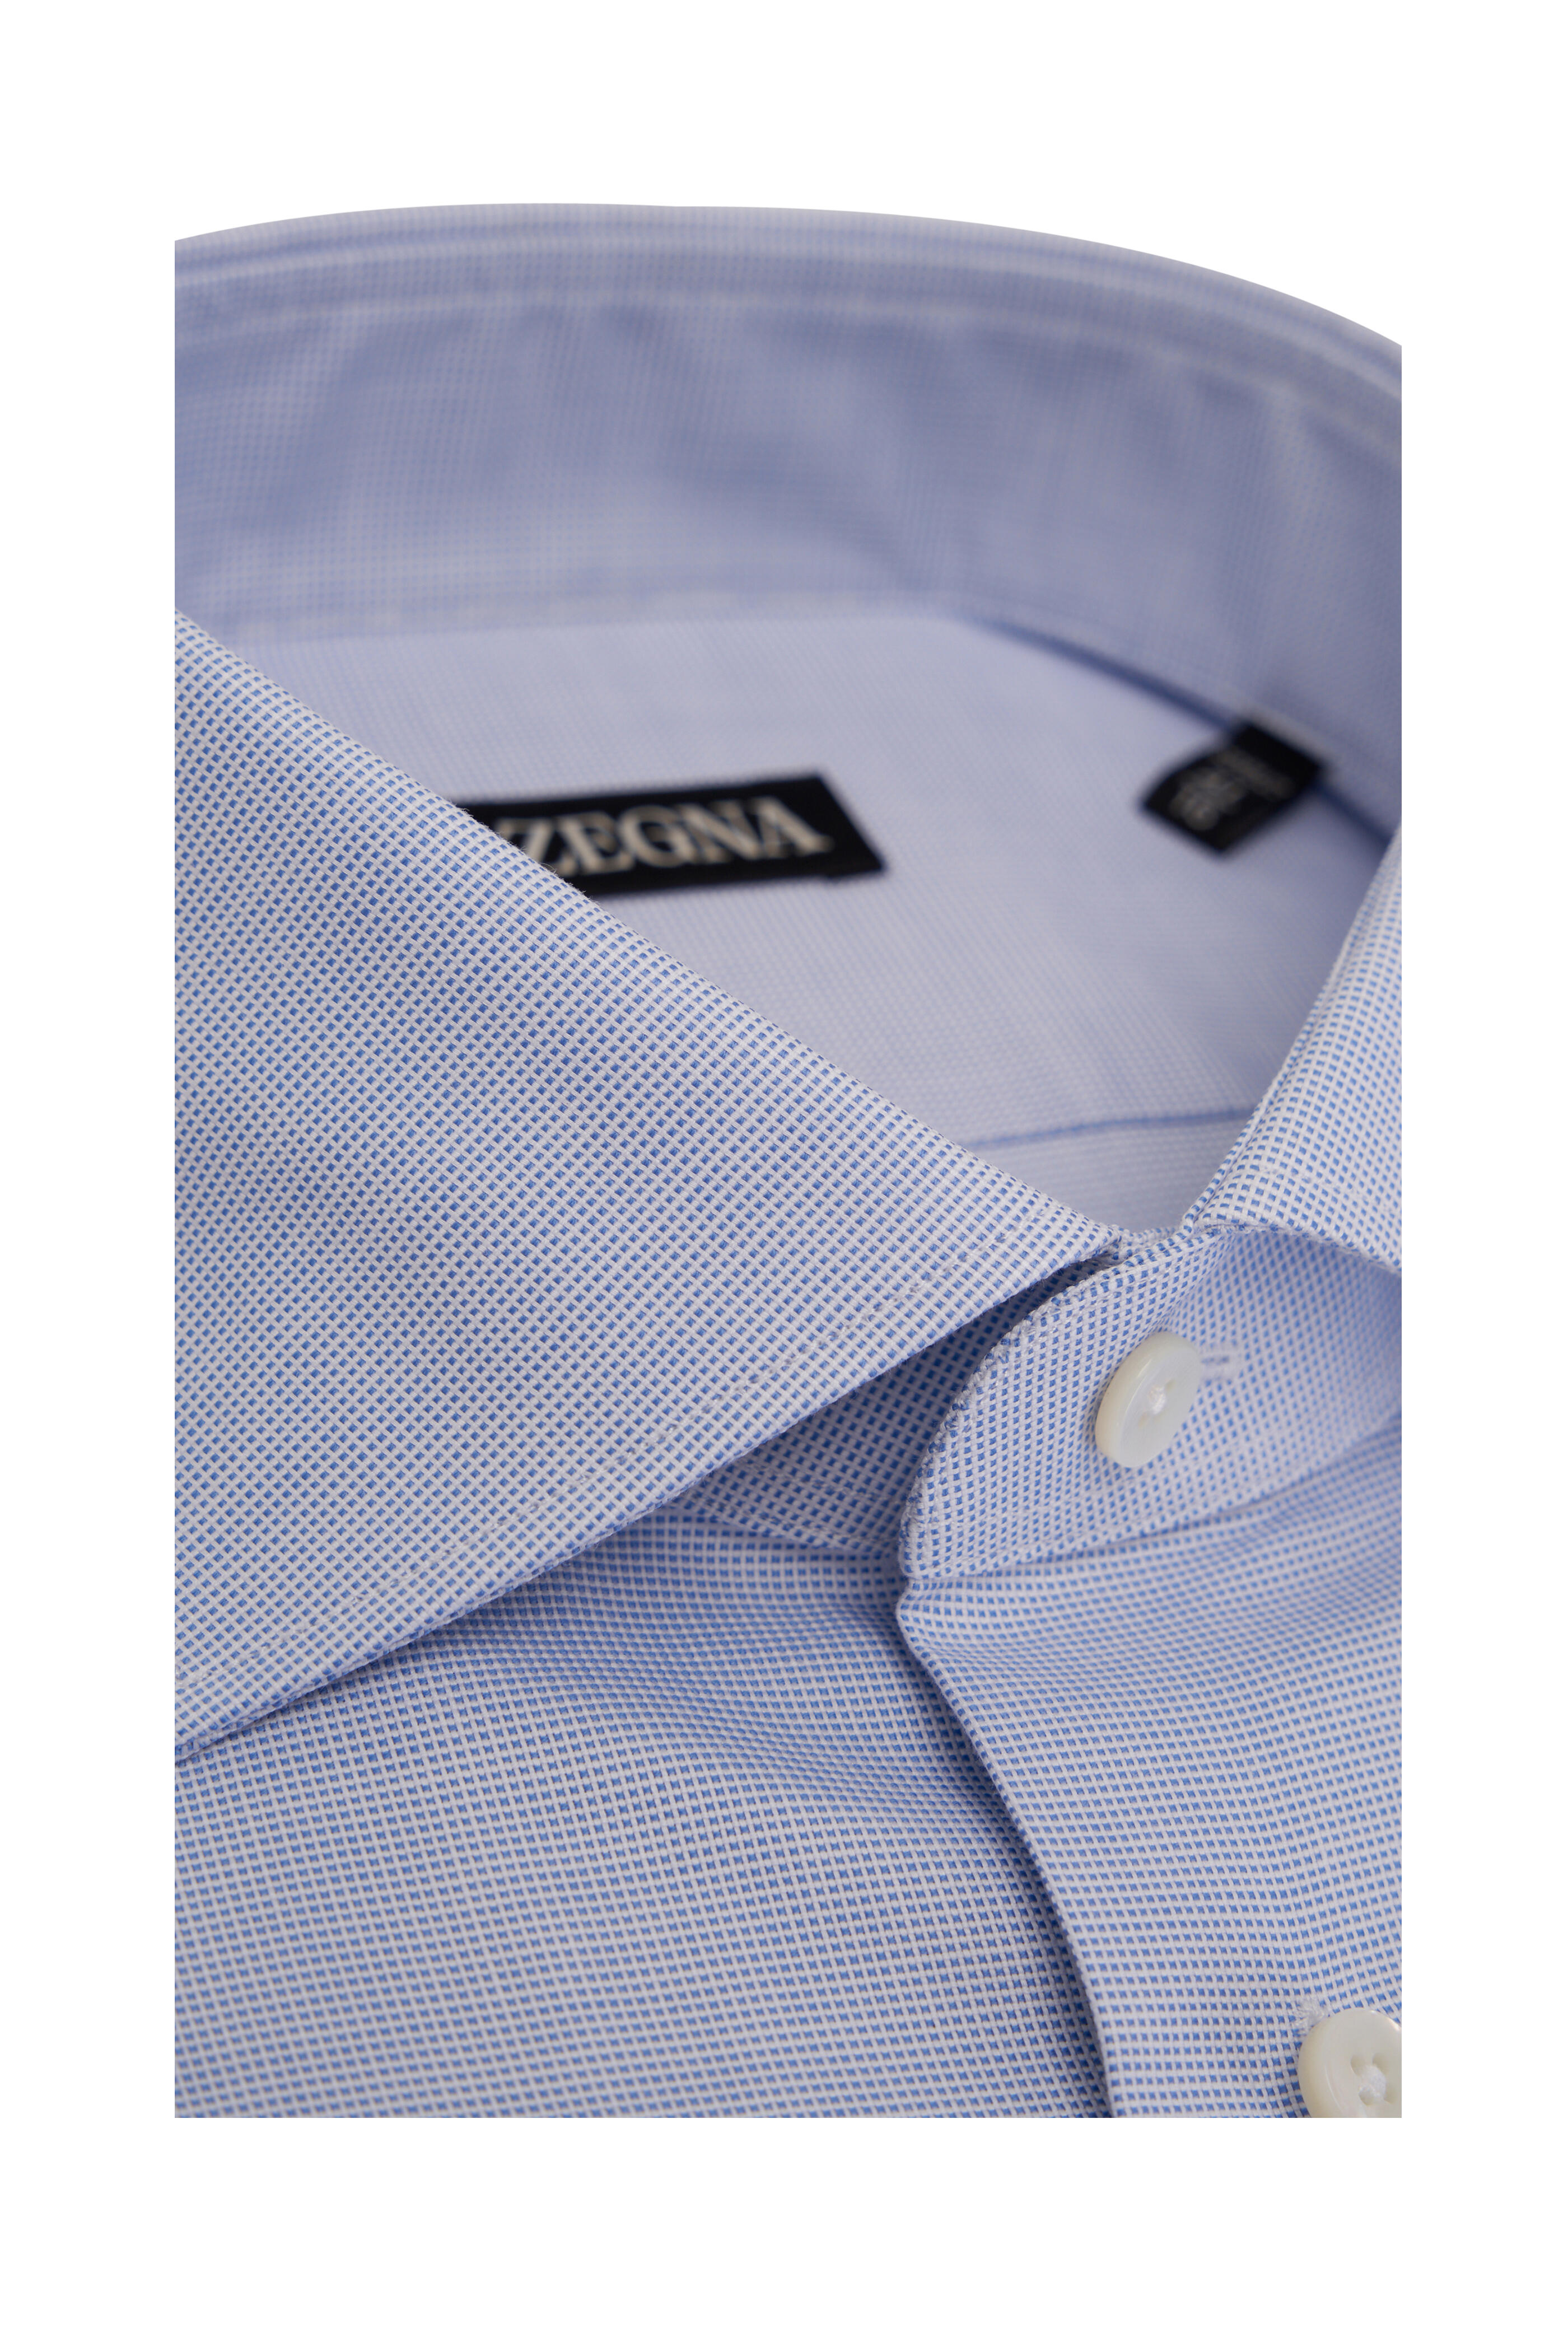 Zegna - Navy Textured Cotton Dress Shirt | Mitchell Stores